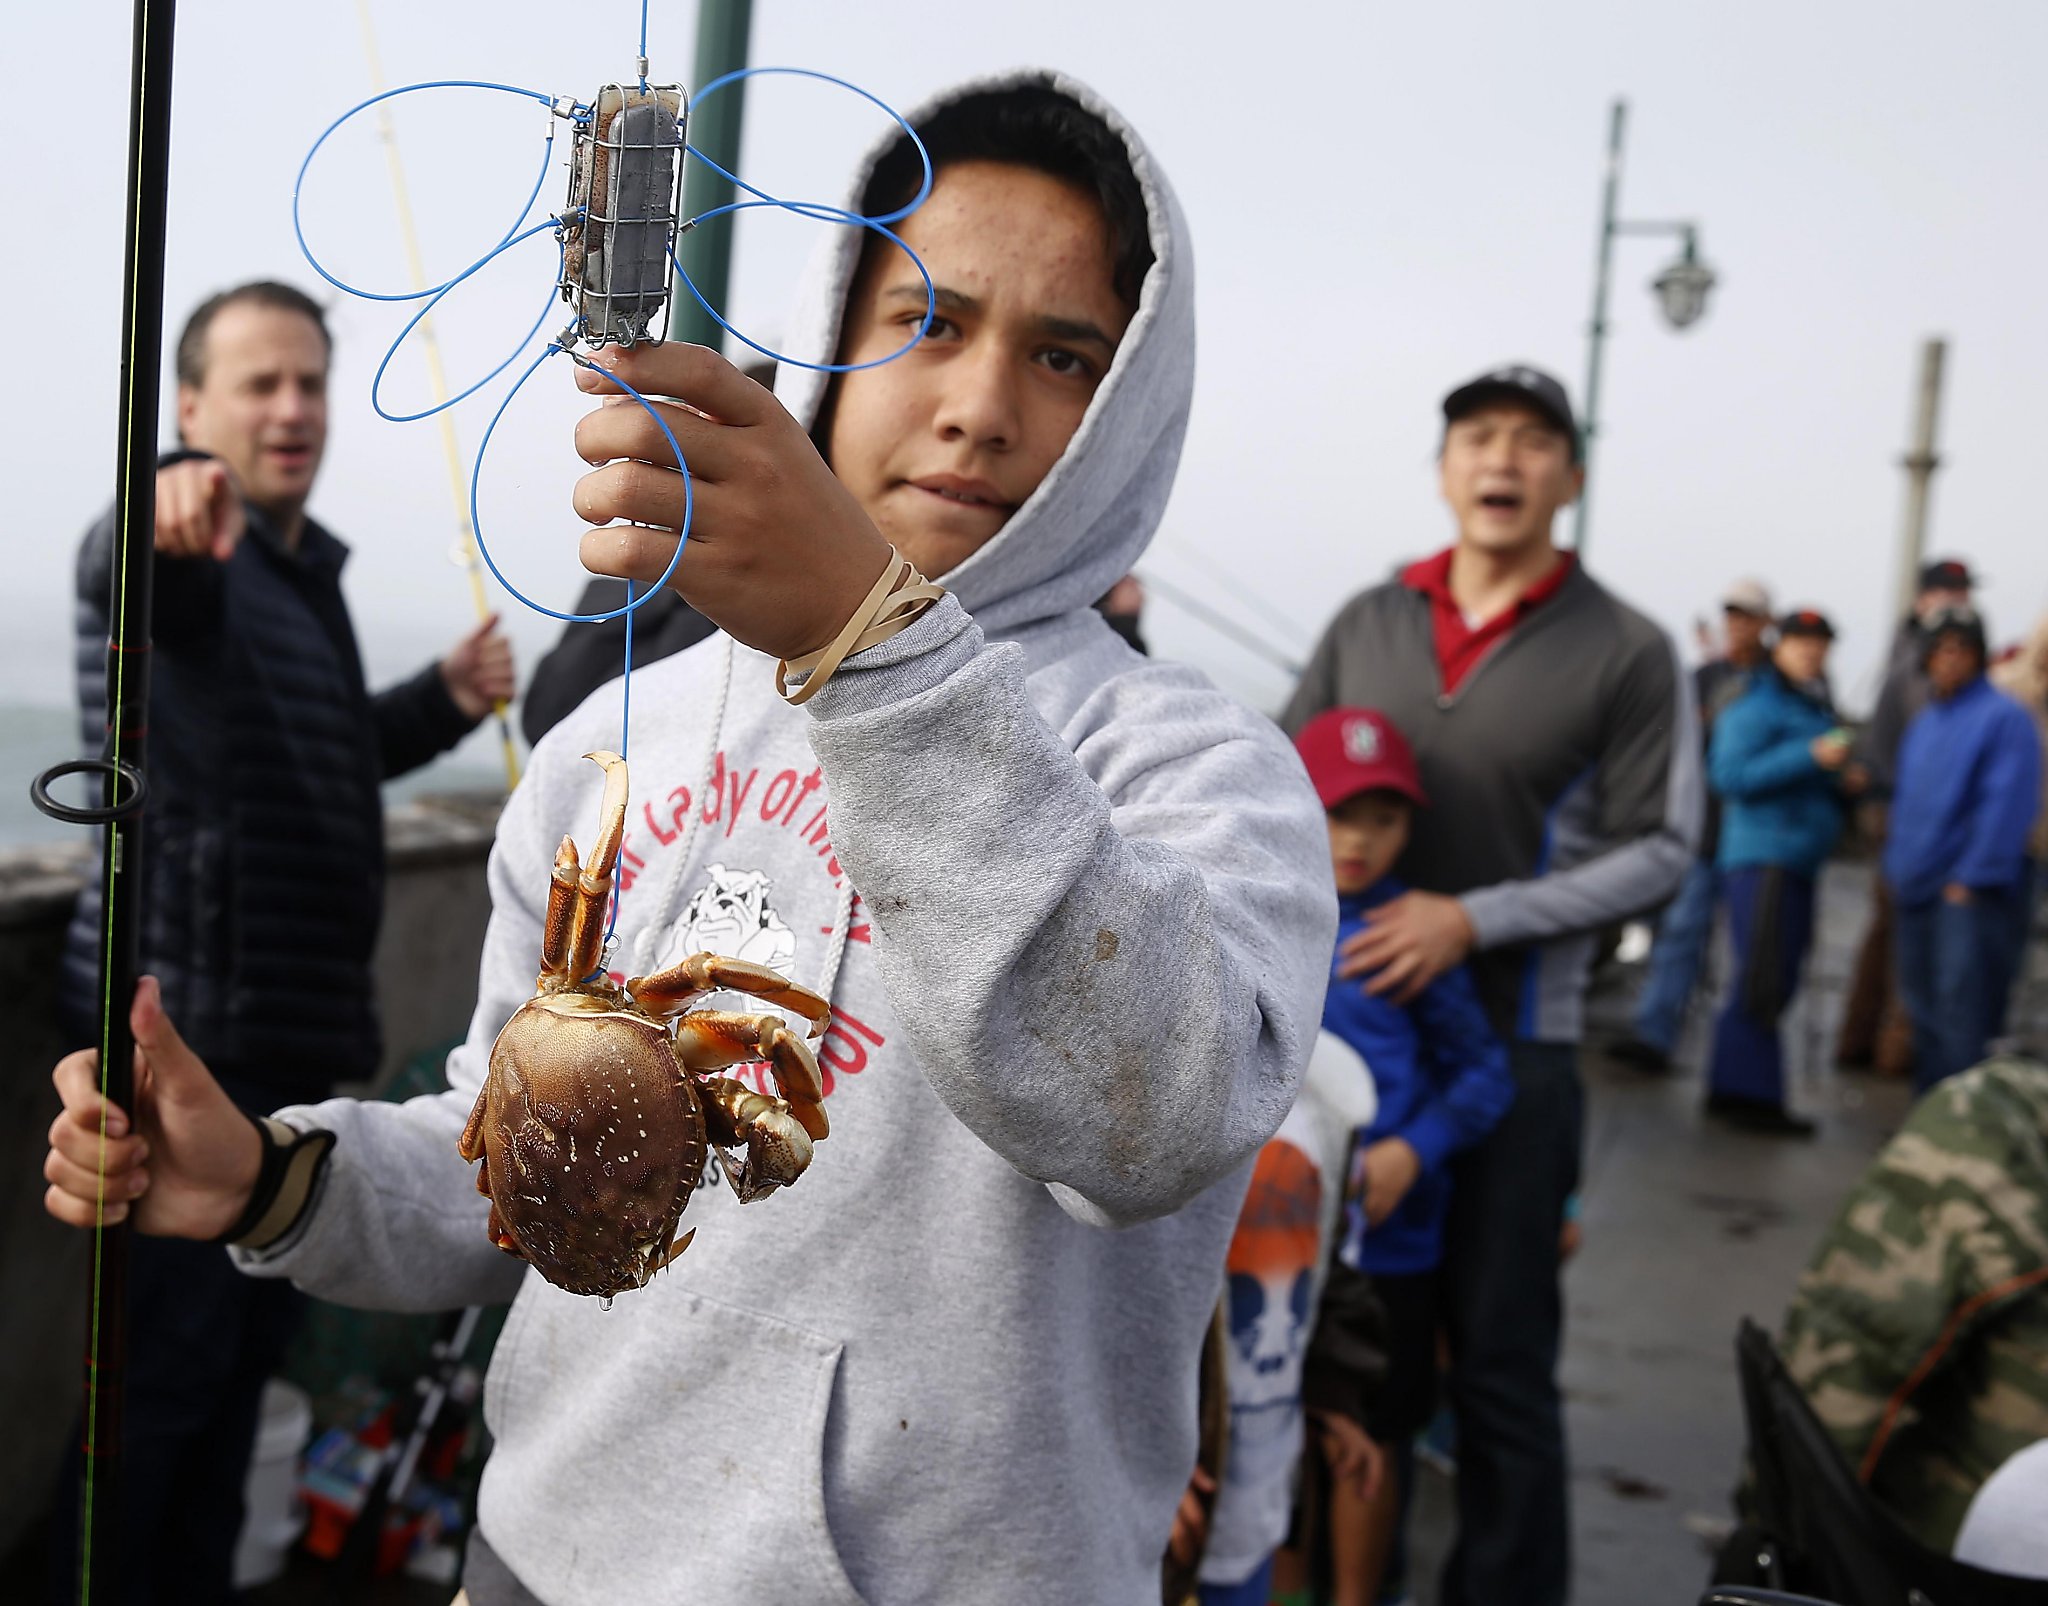 Recreational Dungeness crab season opens in California